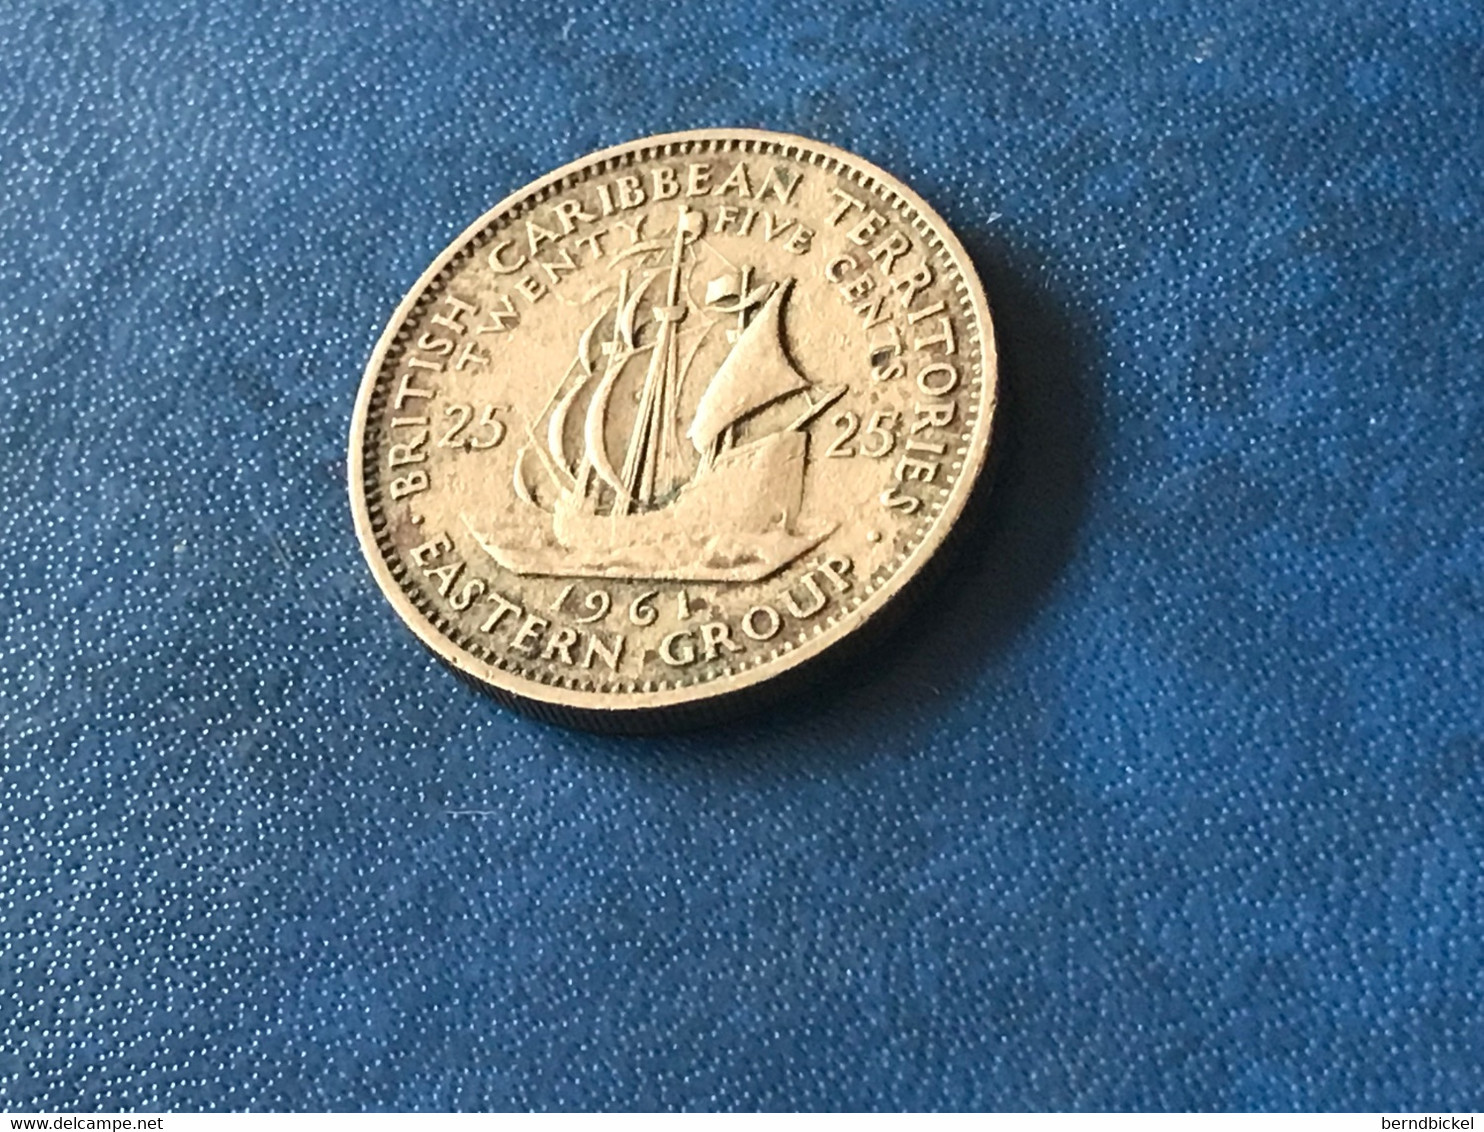 Münzen Münze Umlaufmünze Ostkaribische Staaten 25 Cents 1961 - East Caribbean Territories